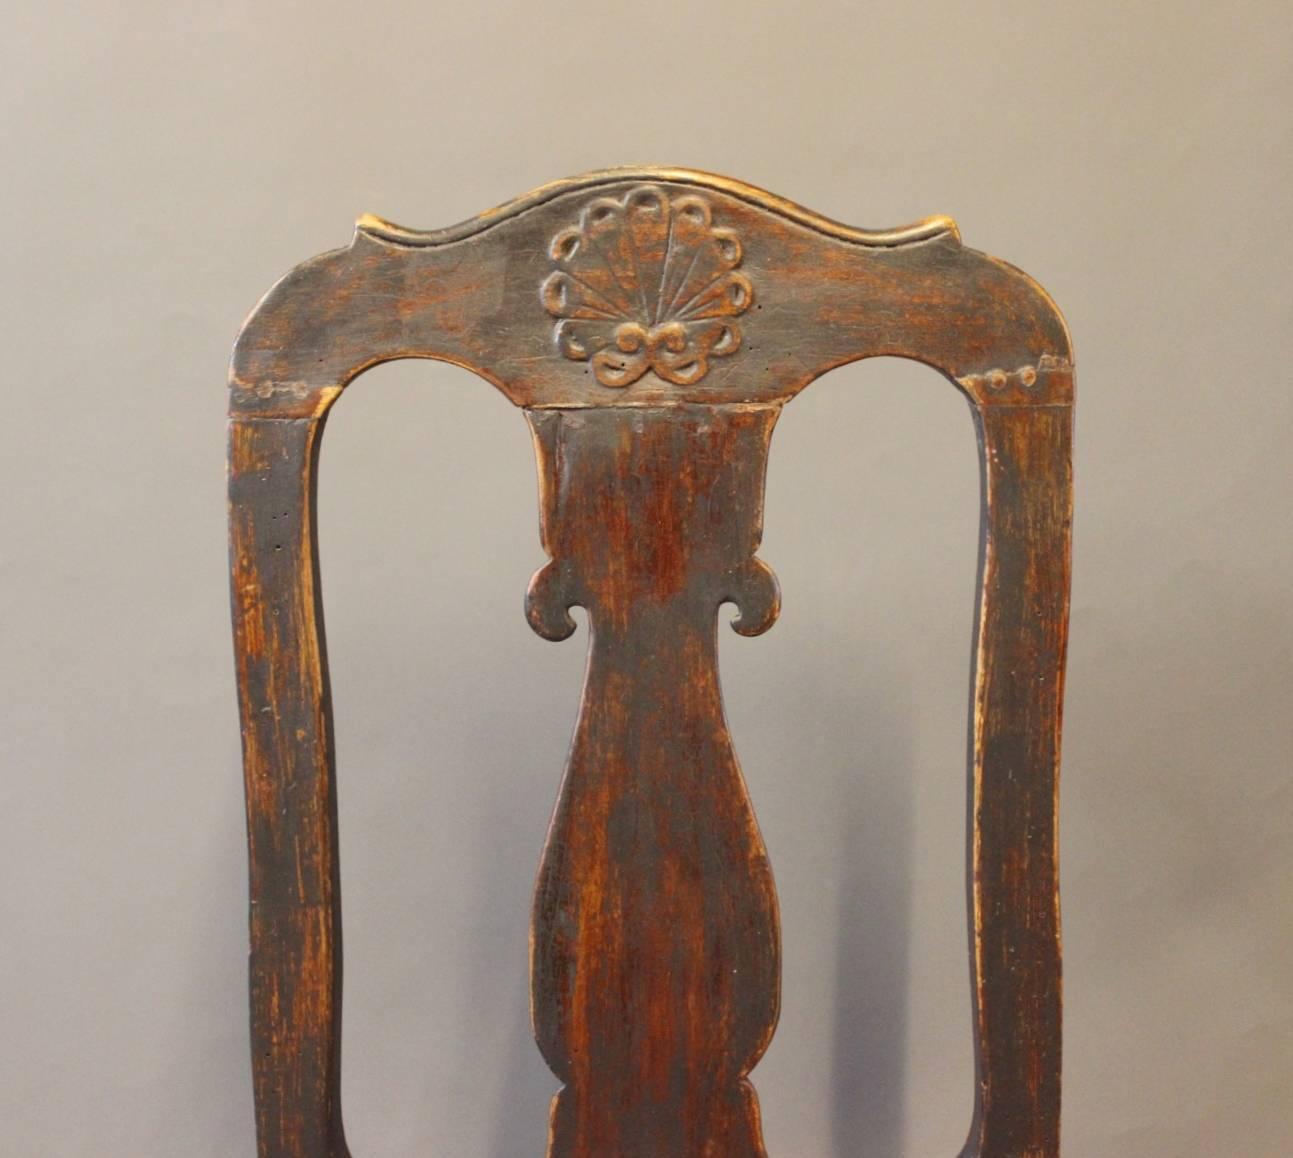 Barocker Stuhl aus bemaltem Holz, ca. 1860er Jahre (Gemalt)